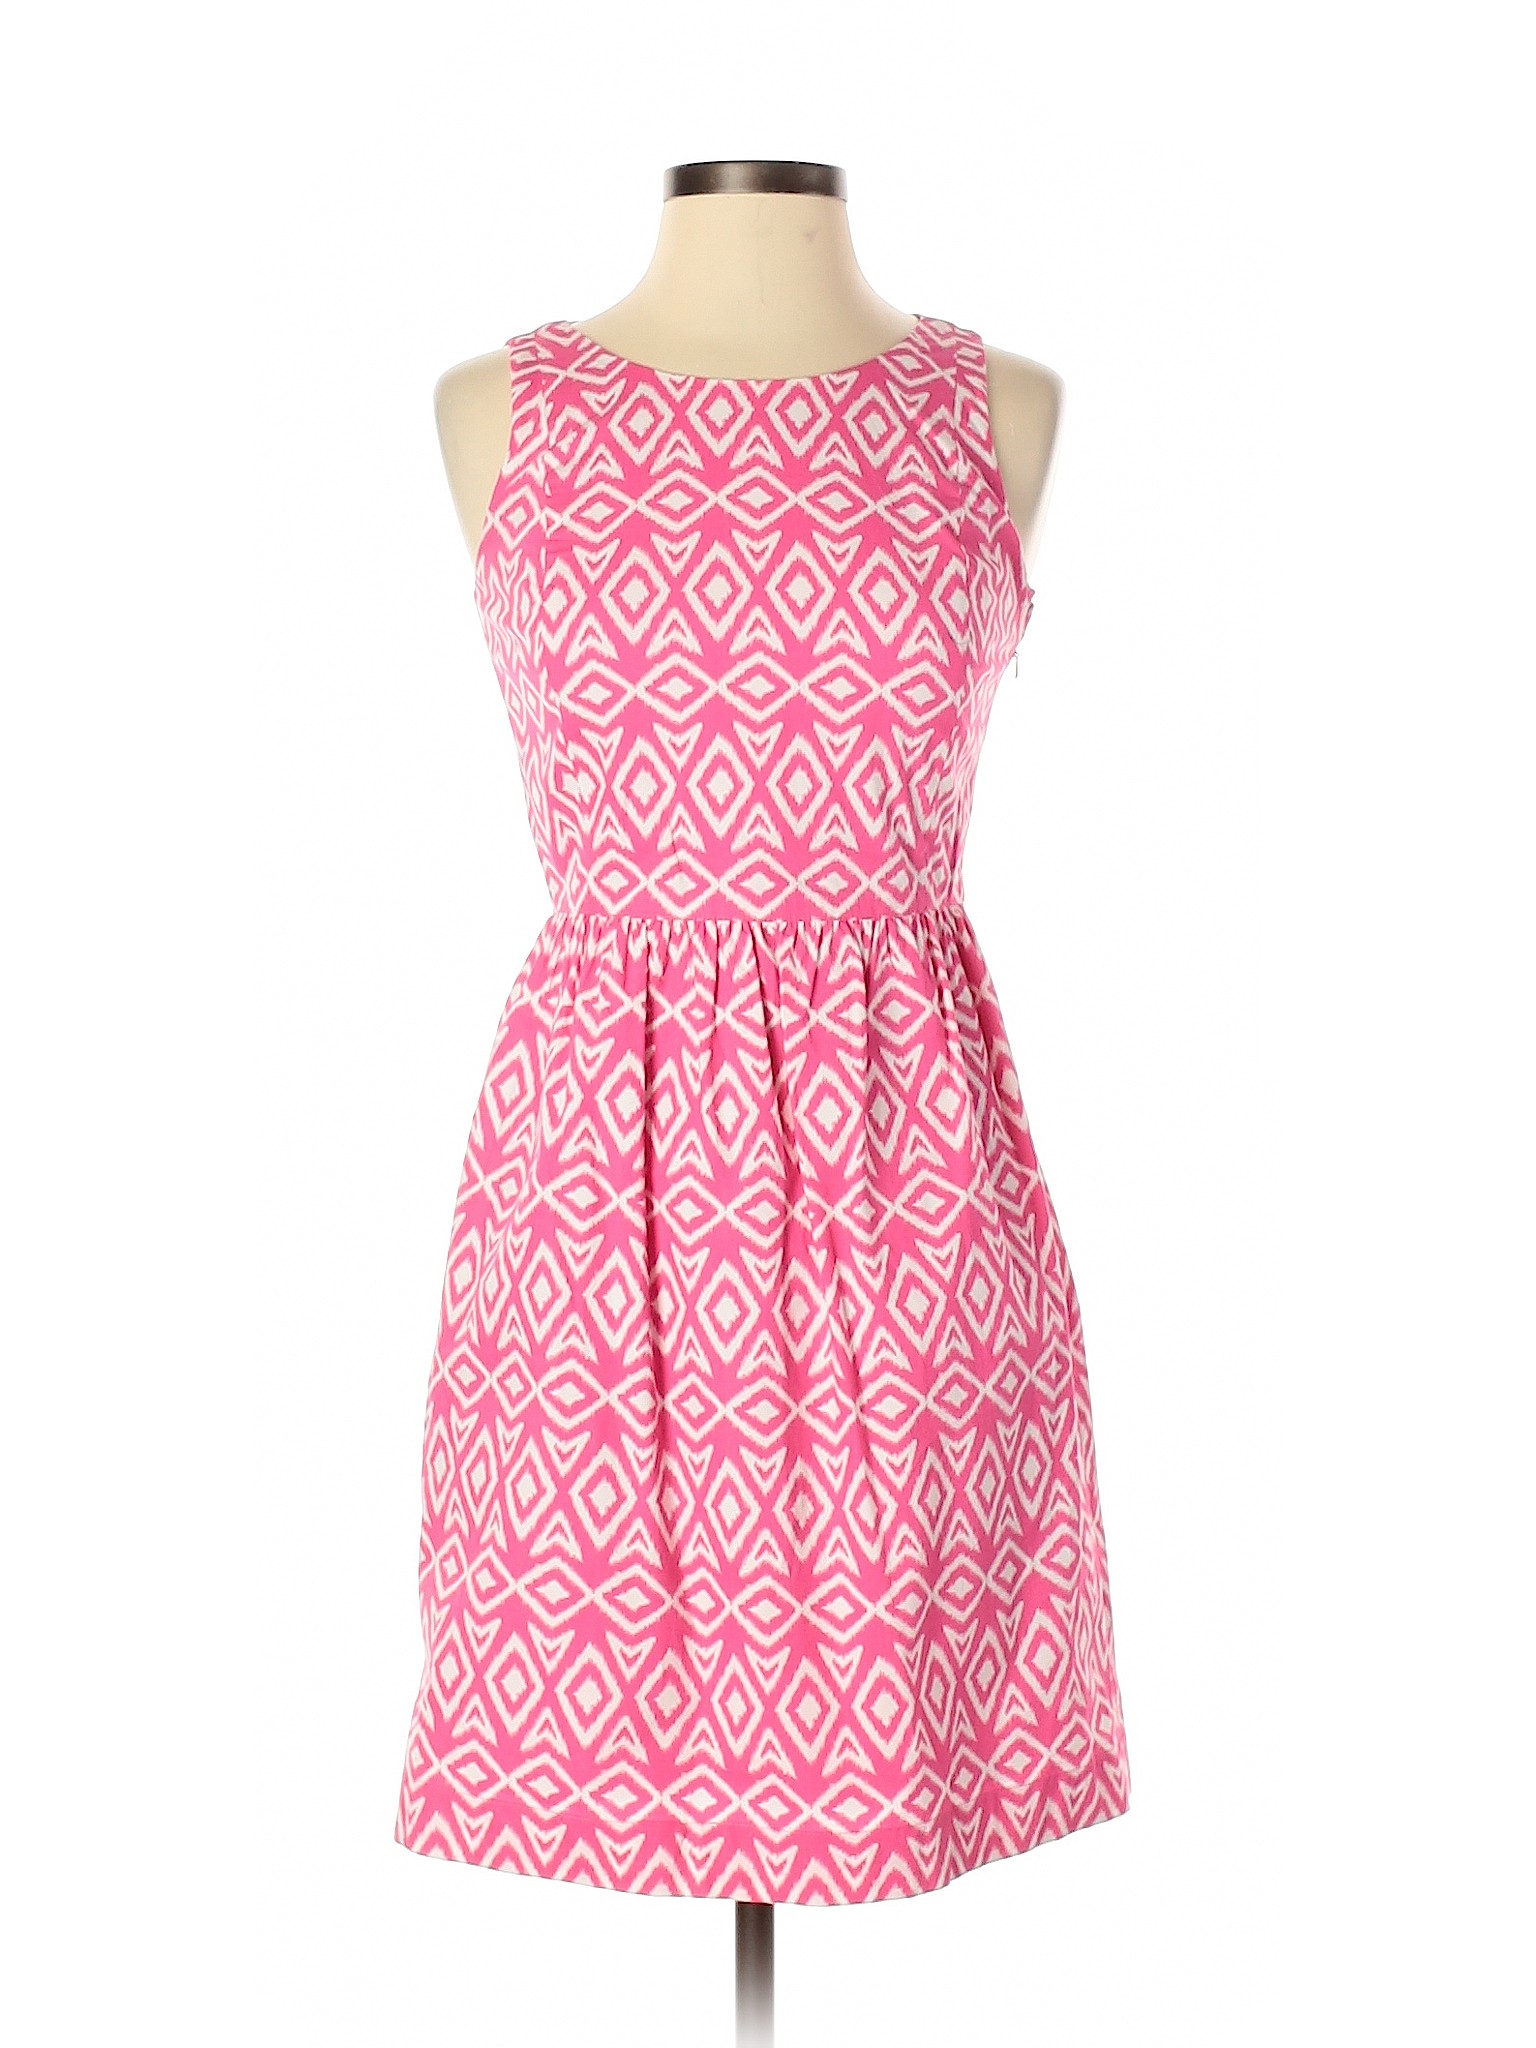 Brooks Brothers 346 Women Pink Casual Dress 0 Petites | eBay